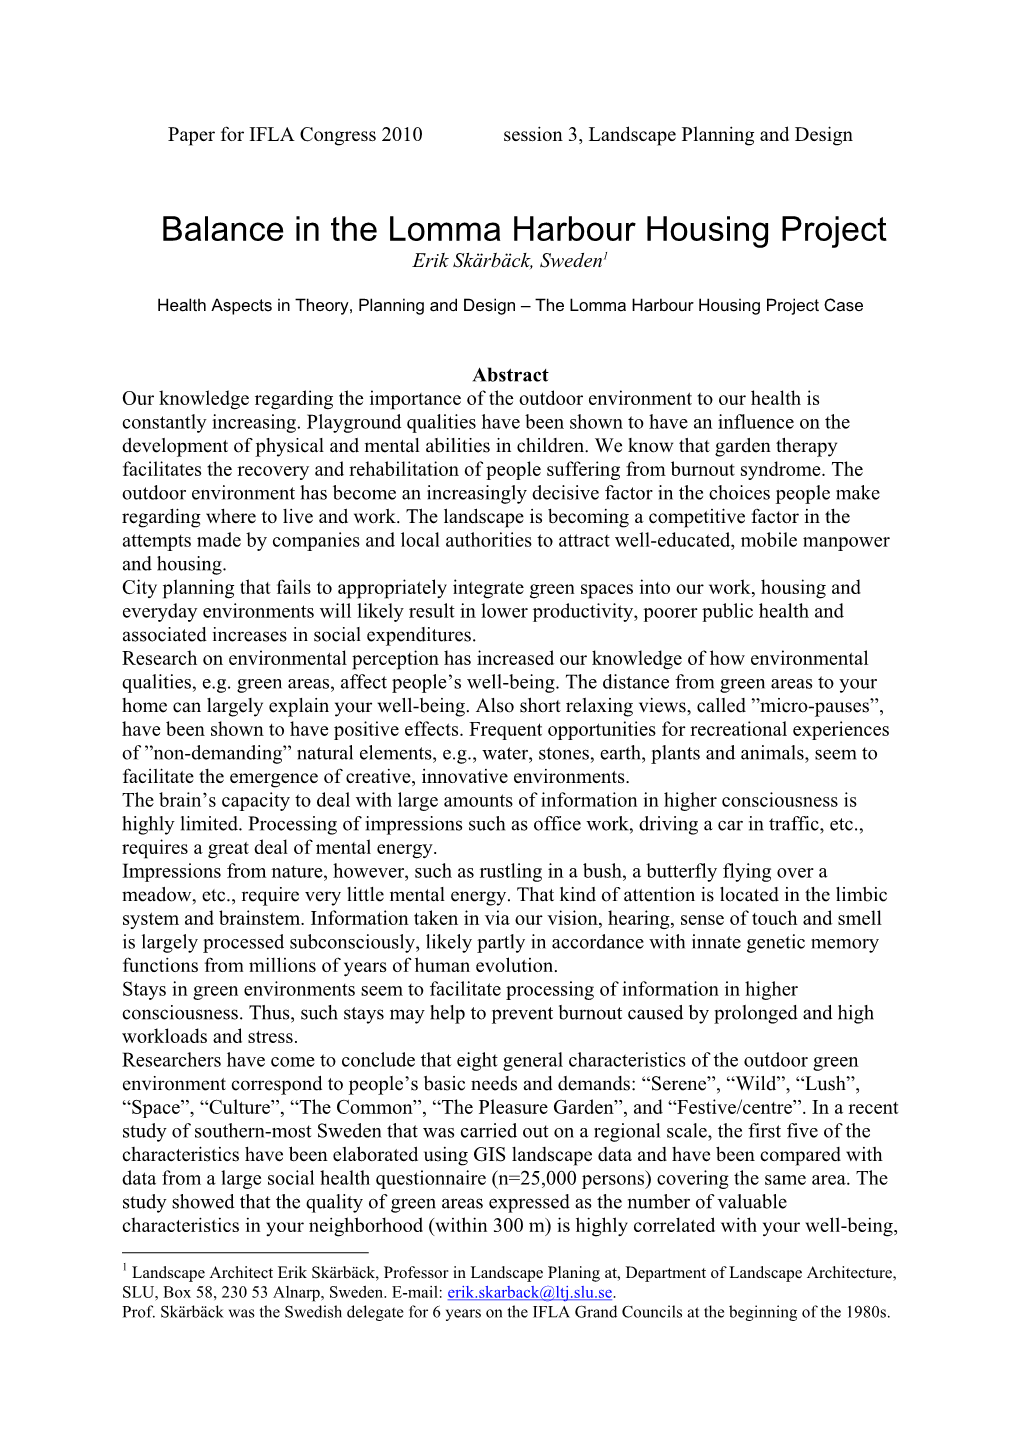 Balance in the Lomma Harbour Housing Project Erik Skärbäck, Sweden1